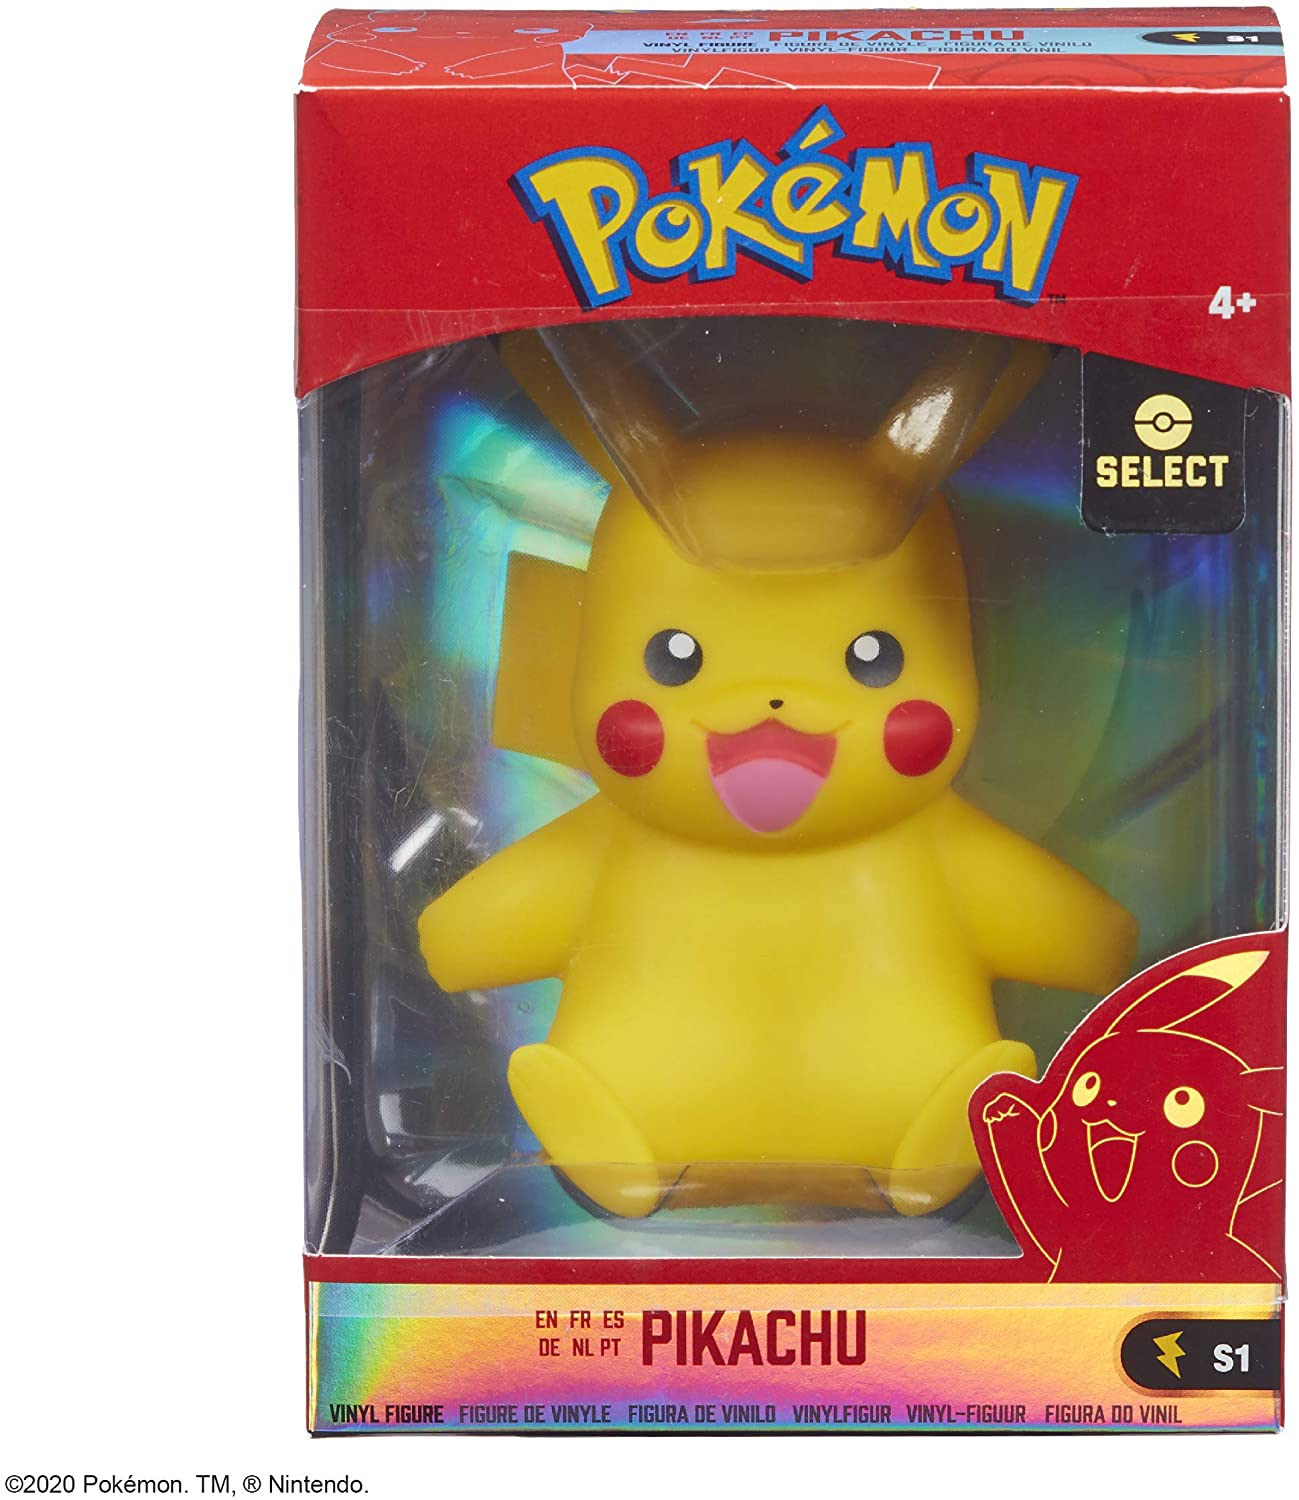 Bonecos Pokémon Figuras Pikachu Teddiursa e Gastly WCT Sunny - JP